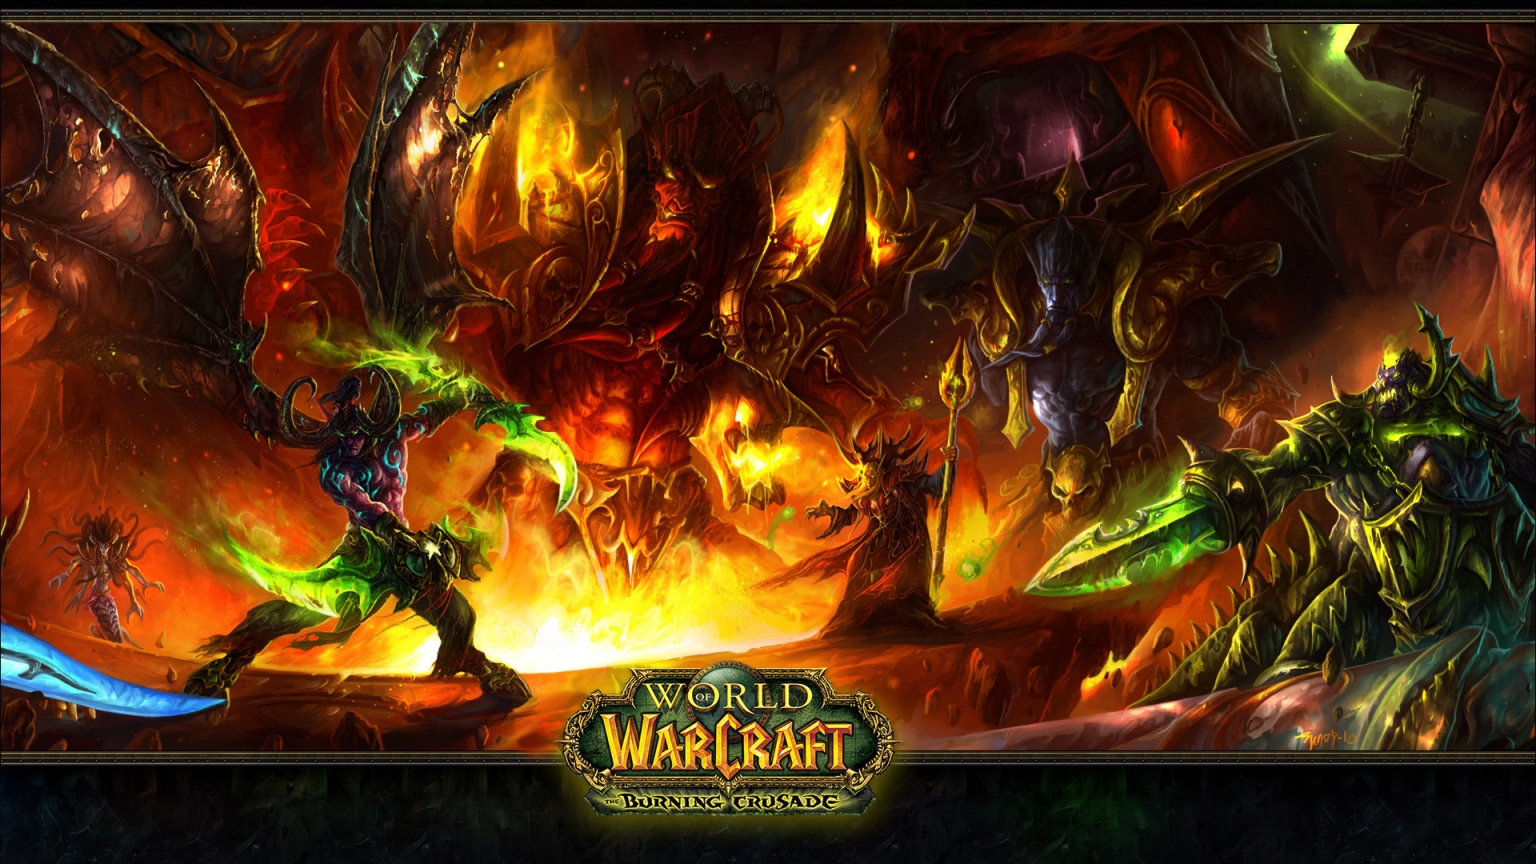 World of Warcraft Burning Crusade for 1536 x 864 HDTV resolution